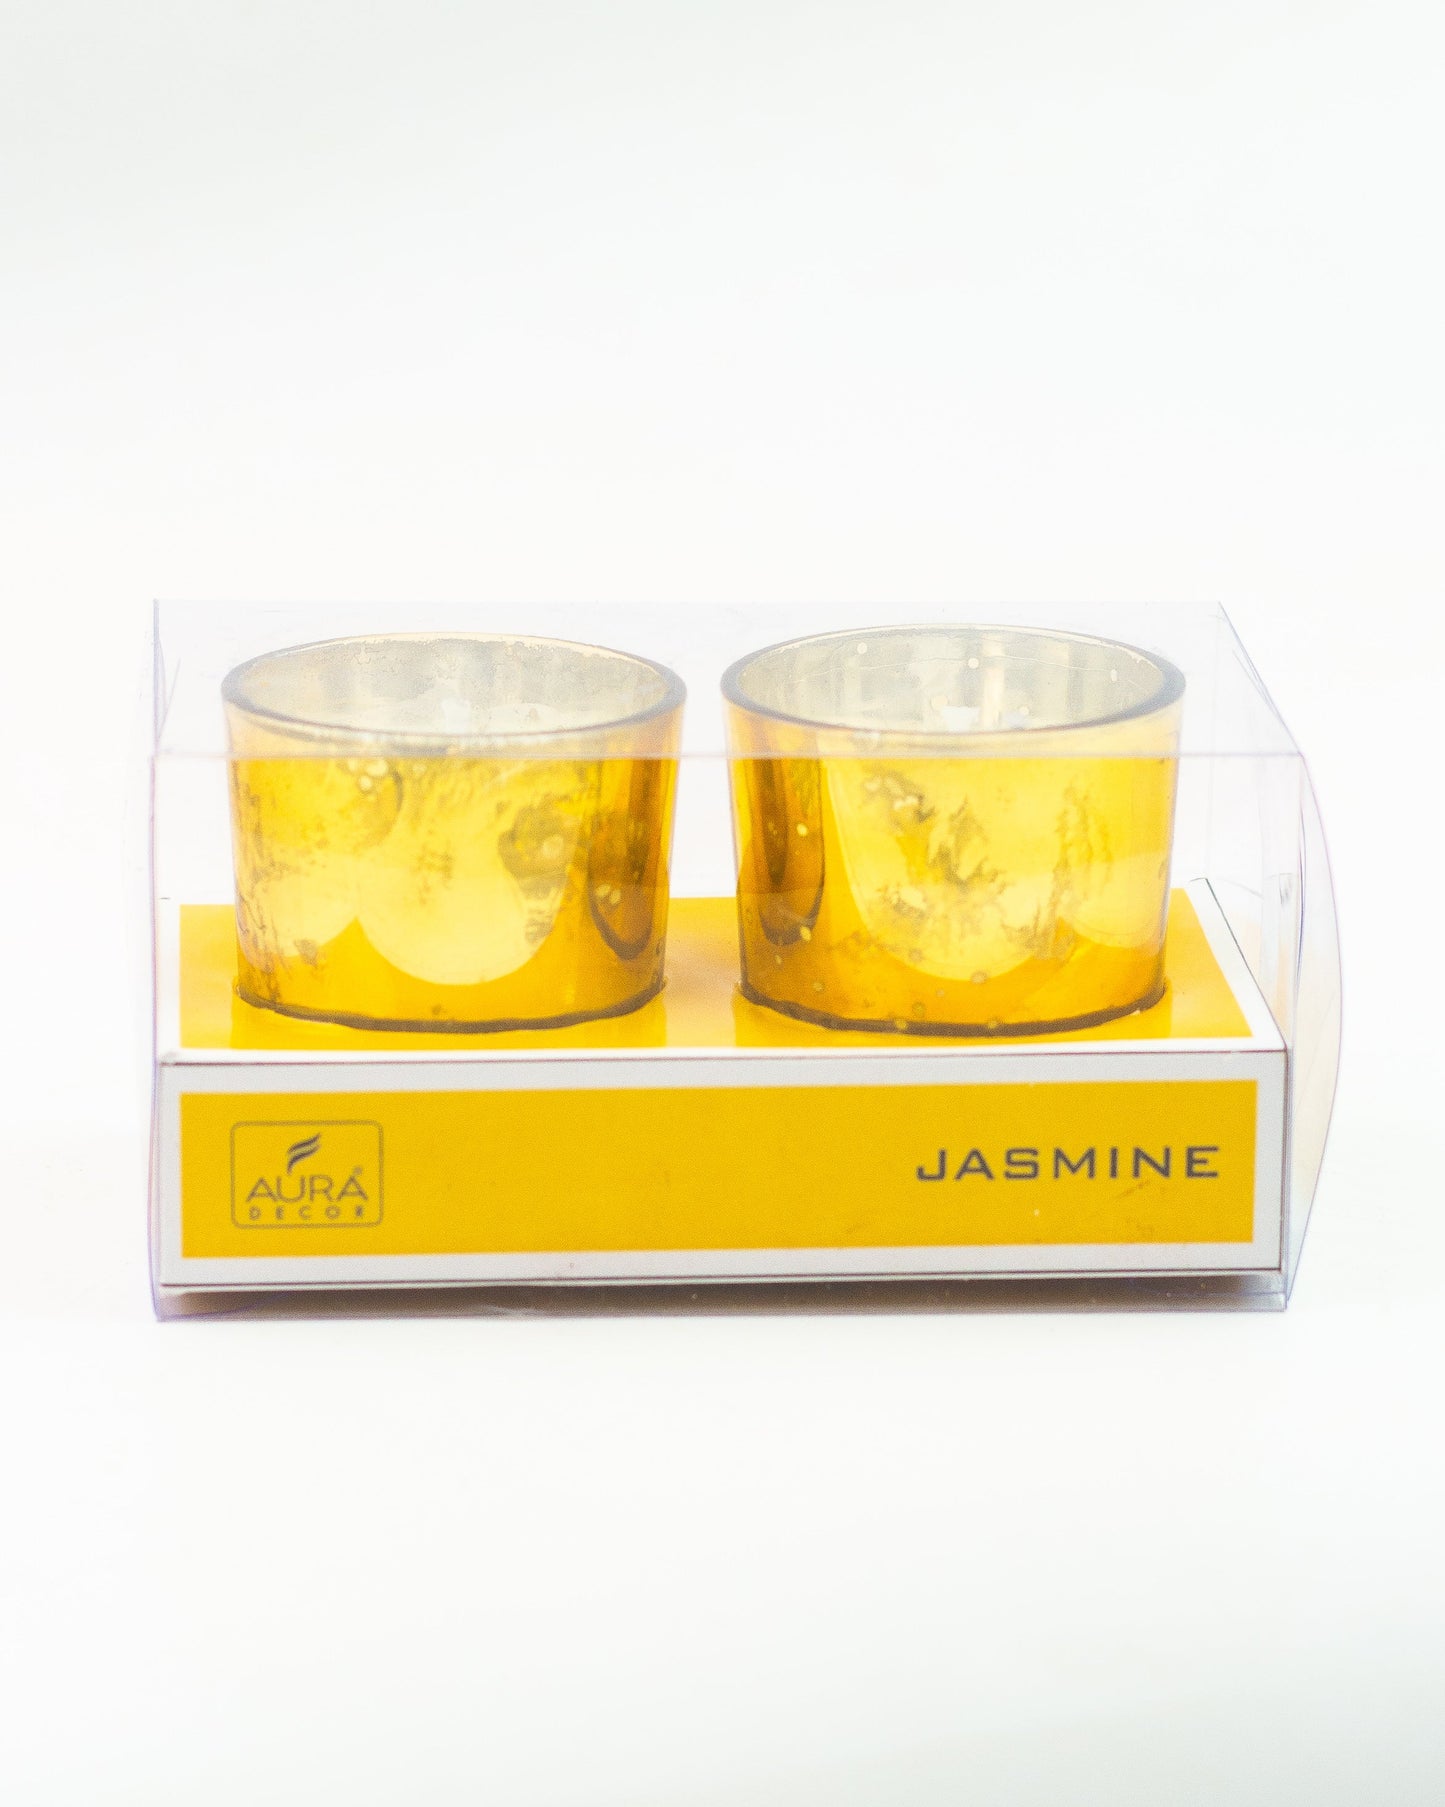 Golden Mercury Votive Glass Candle Jasmine Fragrance (Set of 2)